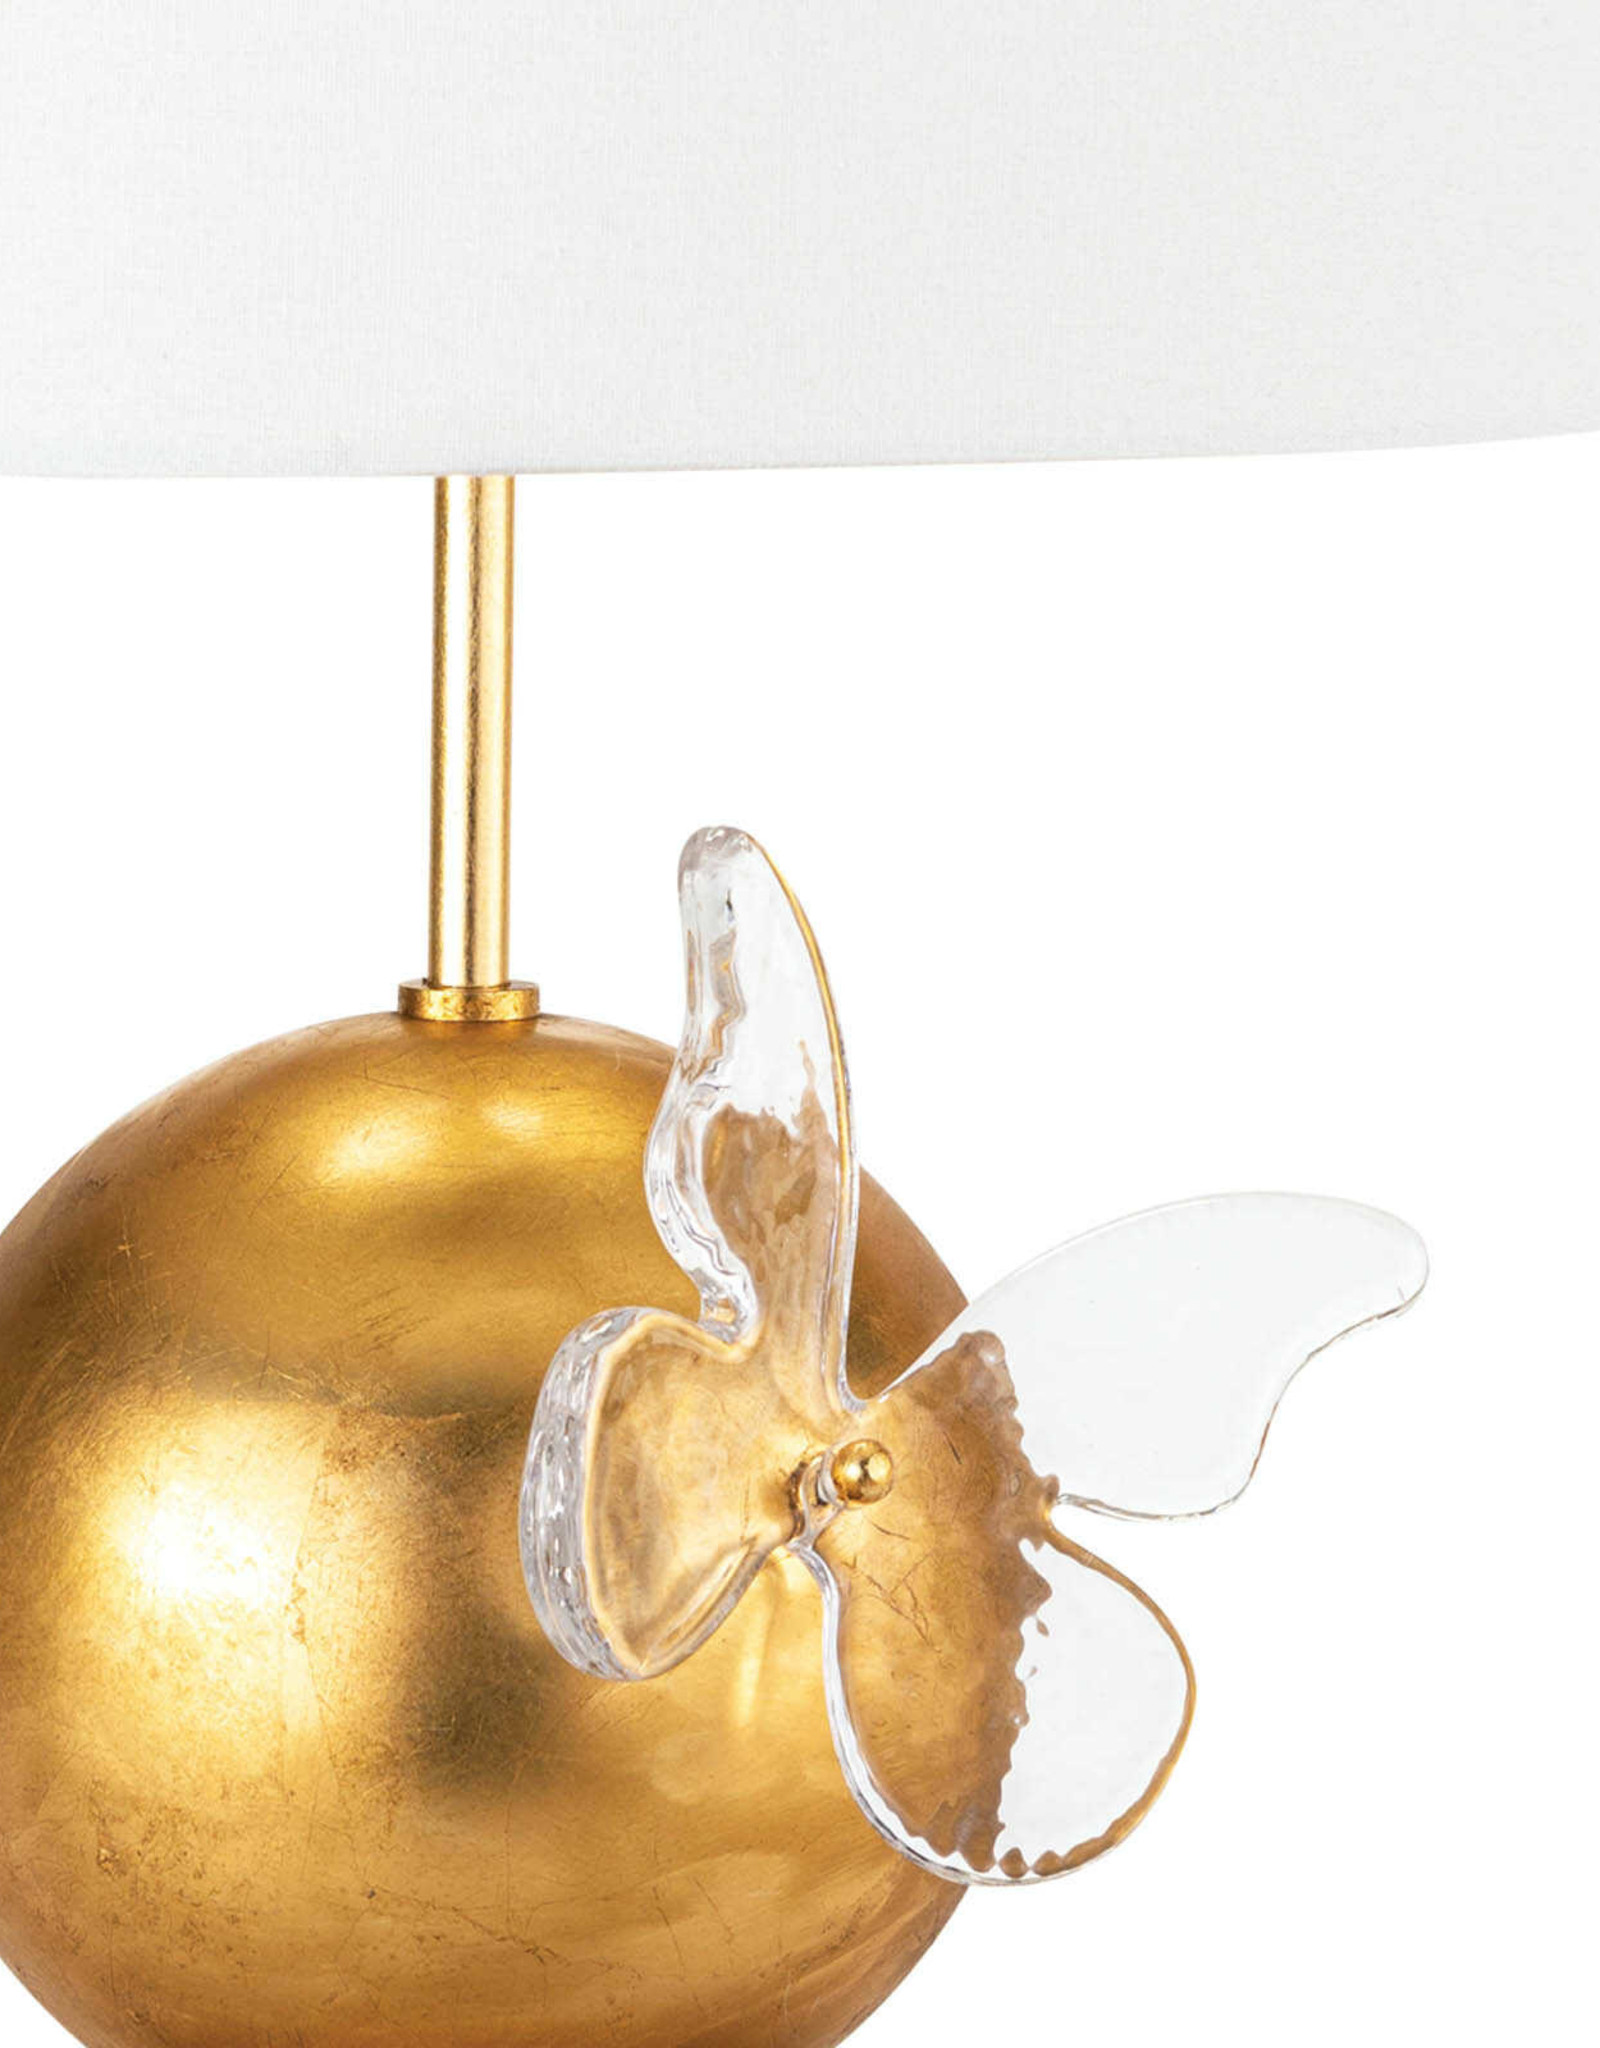 Regina Andrew Design Monarch Table Lamp